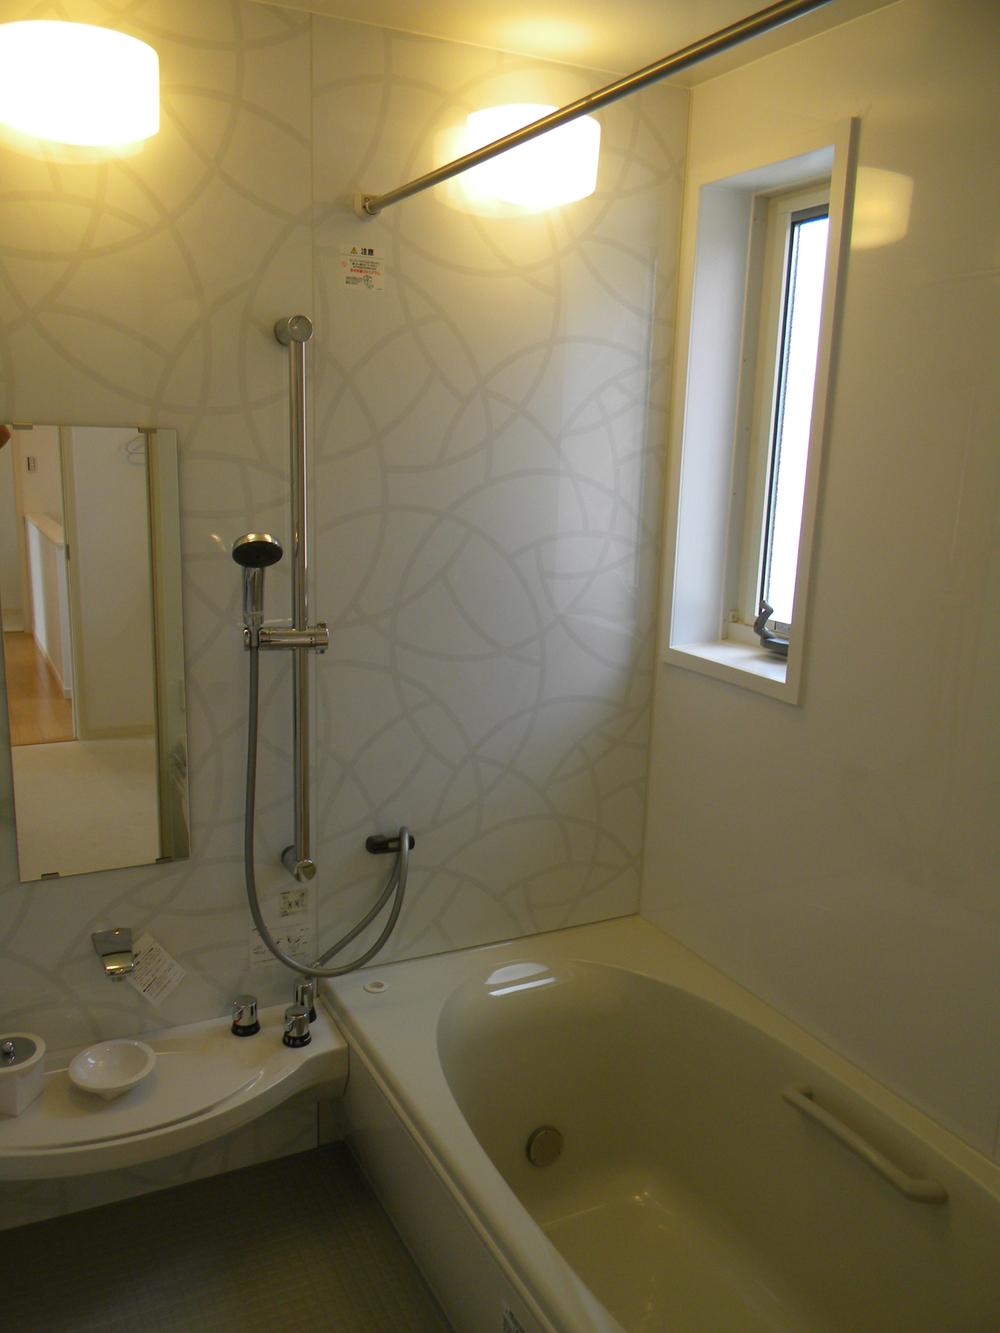 Bathroom. Building E bathroom Design bus with heating ventilation dryer